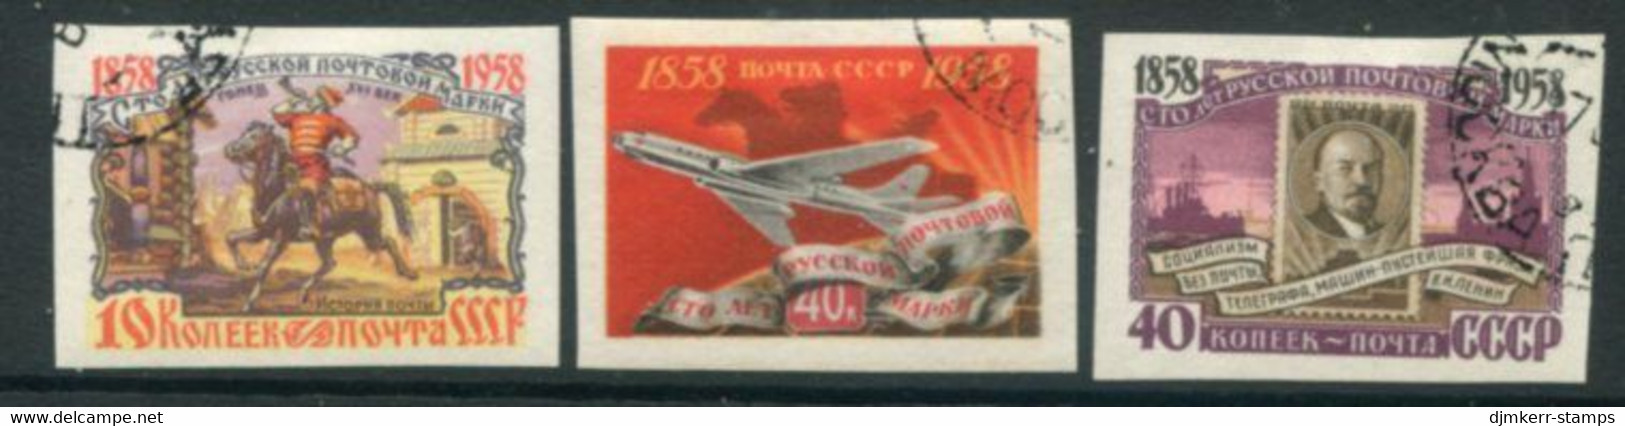 SOVIET UNION 1958 Russian Stamp Centenary Imperforate Used.  Michel 2114, 2118-19 B - Gebruikt